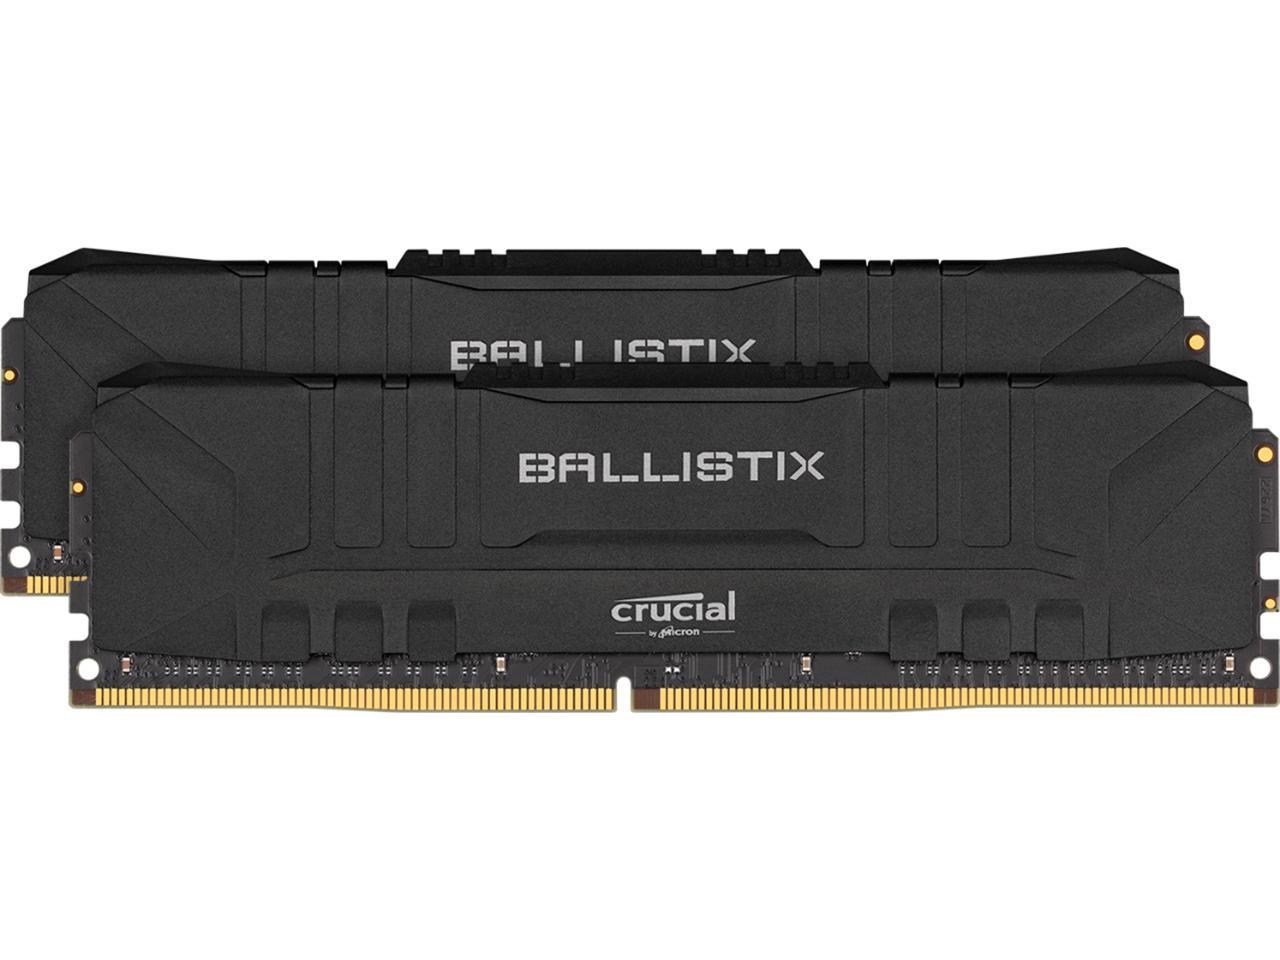 Crucial Ballistix 2400 MHz DDR4 DRAM Desktop Gaming Memory Kit 16GB (8GBx2)  CL16 BL2K8G24C16U4B (BLACK)